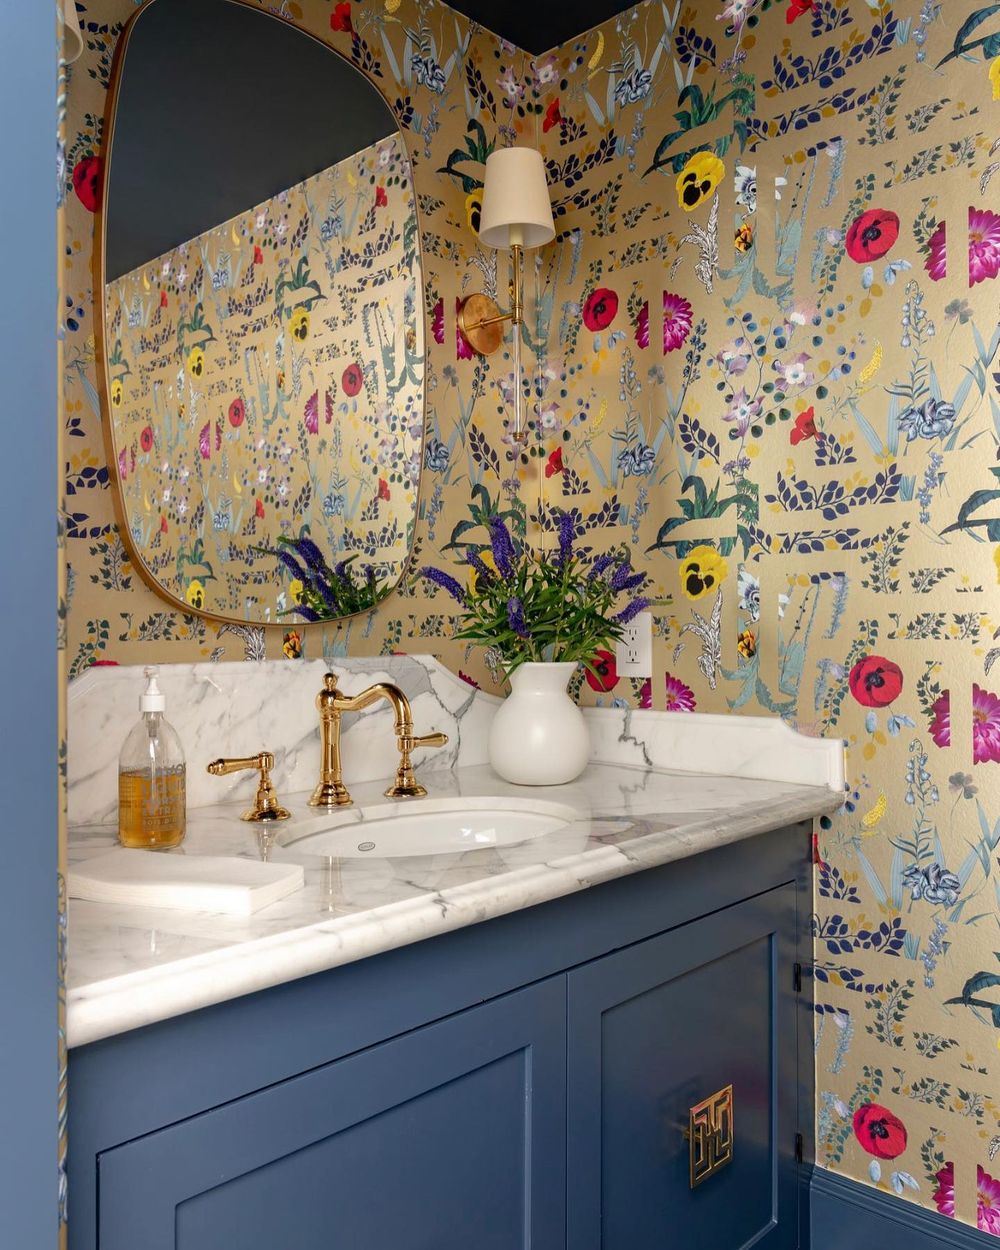 Bathroom wallpaper ideas Colorful flowers on gold ashleygoforth